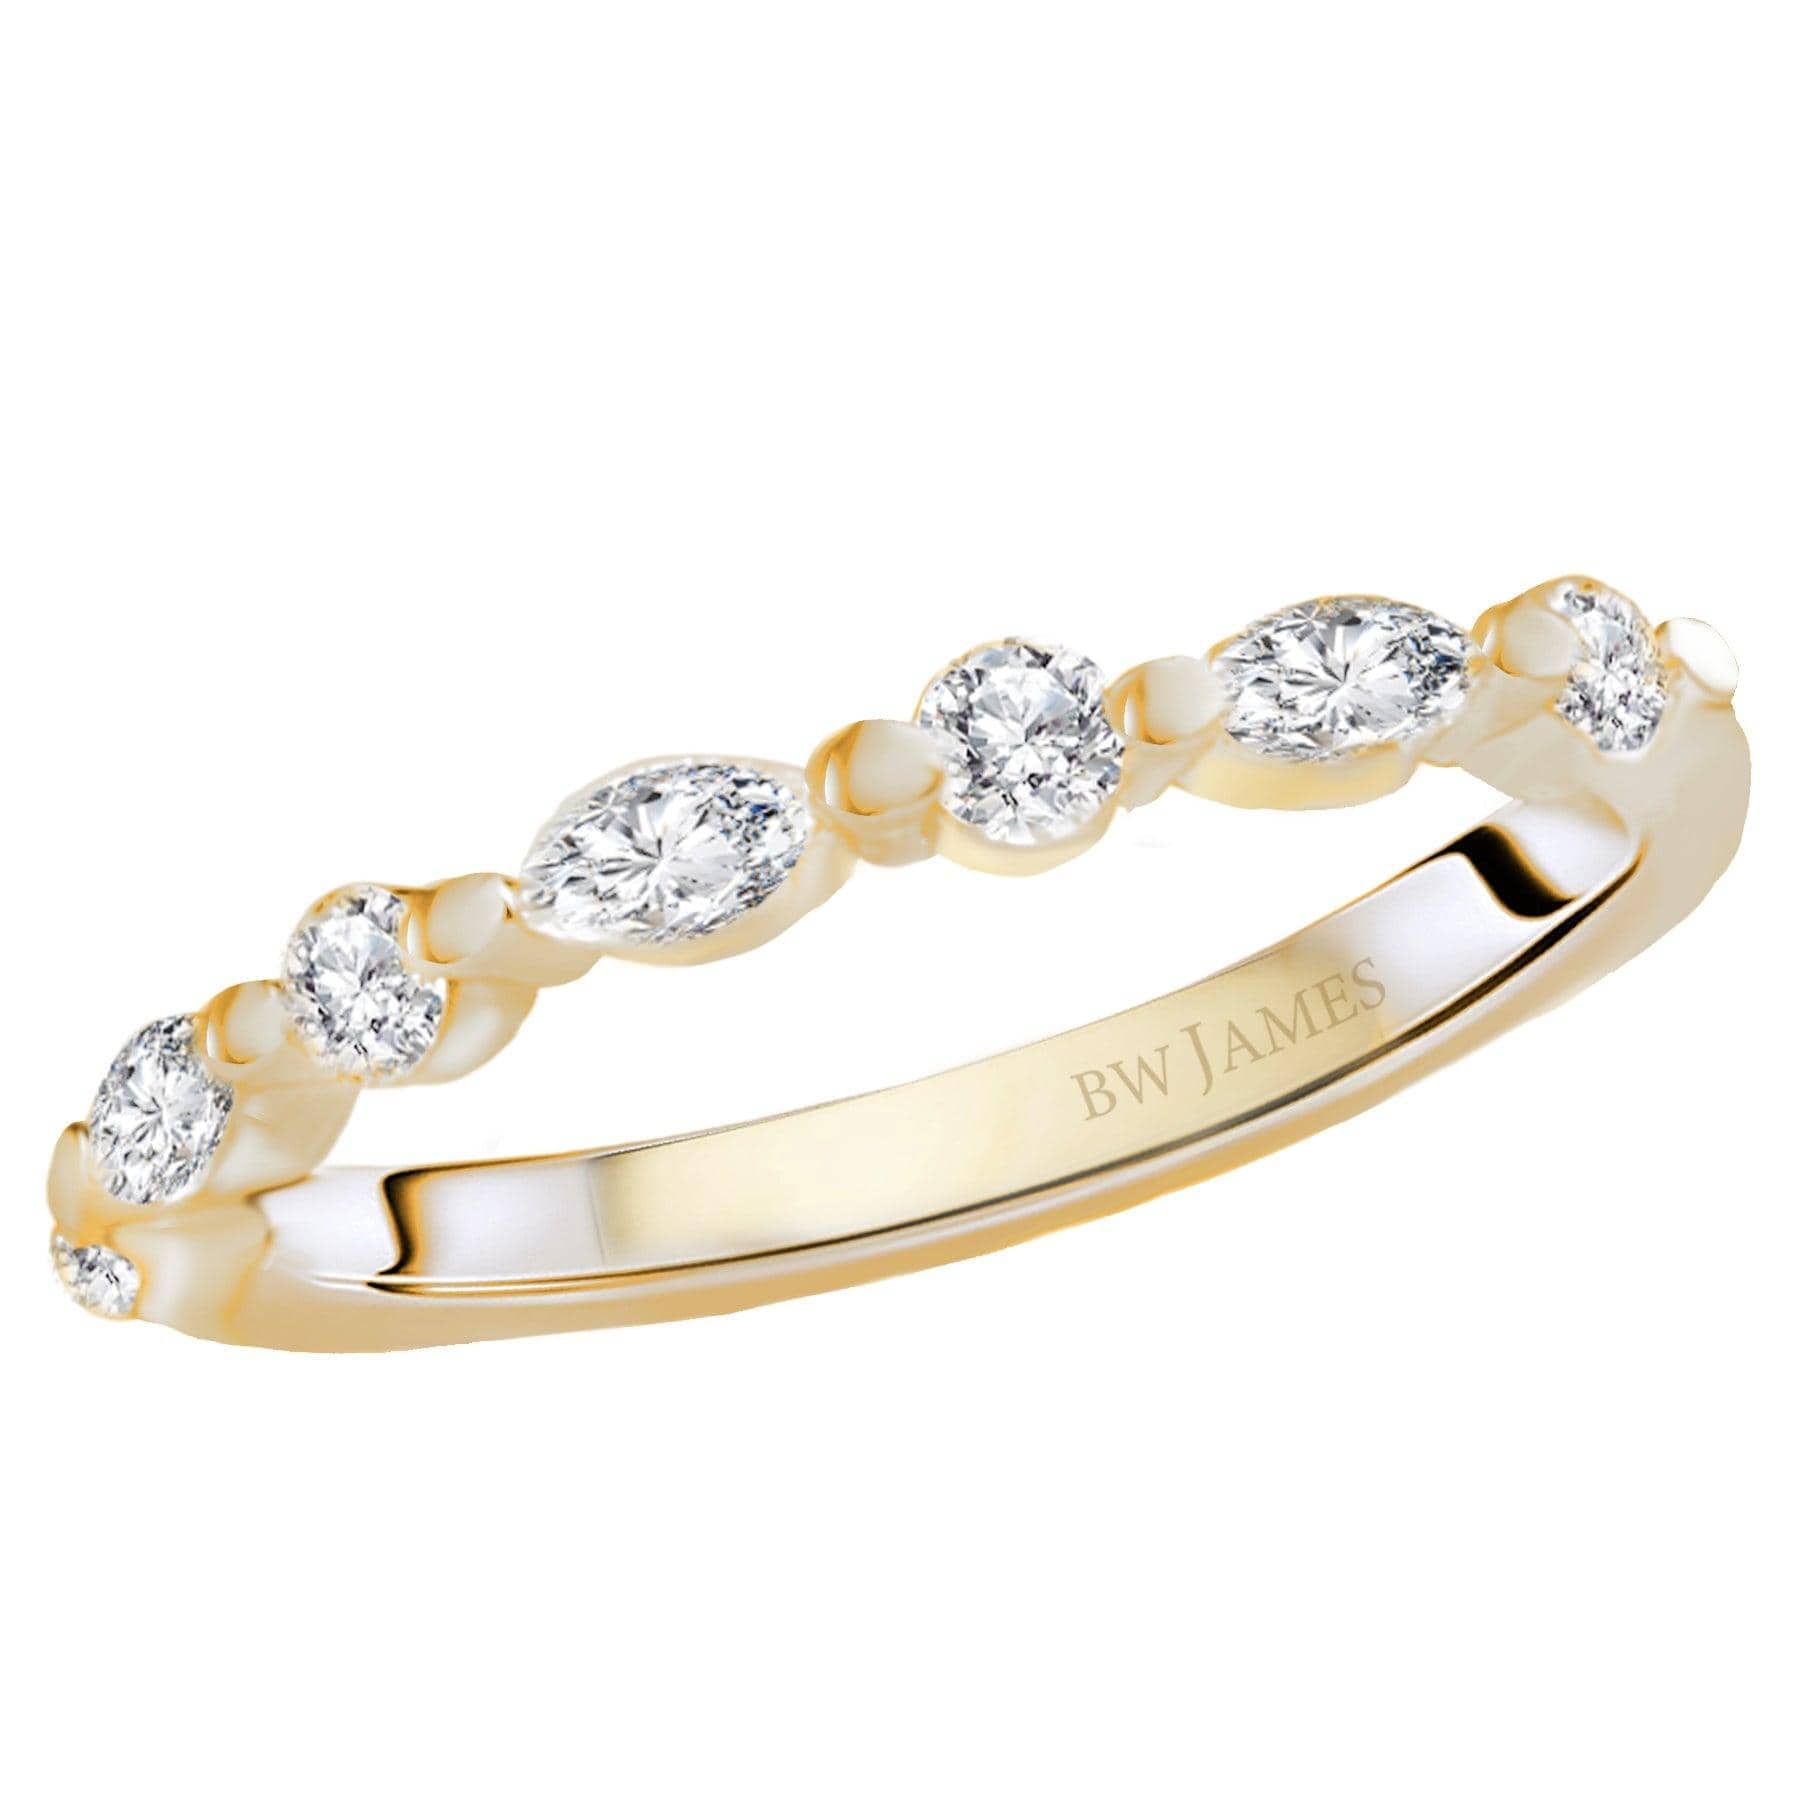 BW JAMES Engagement Rings "The Zena" Classic Oval Shape Semi-Mount Diamond Ring